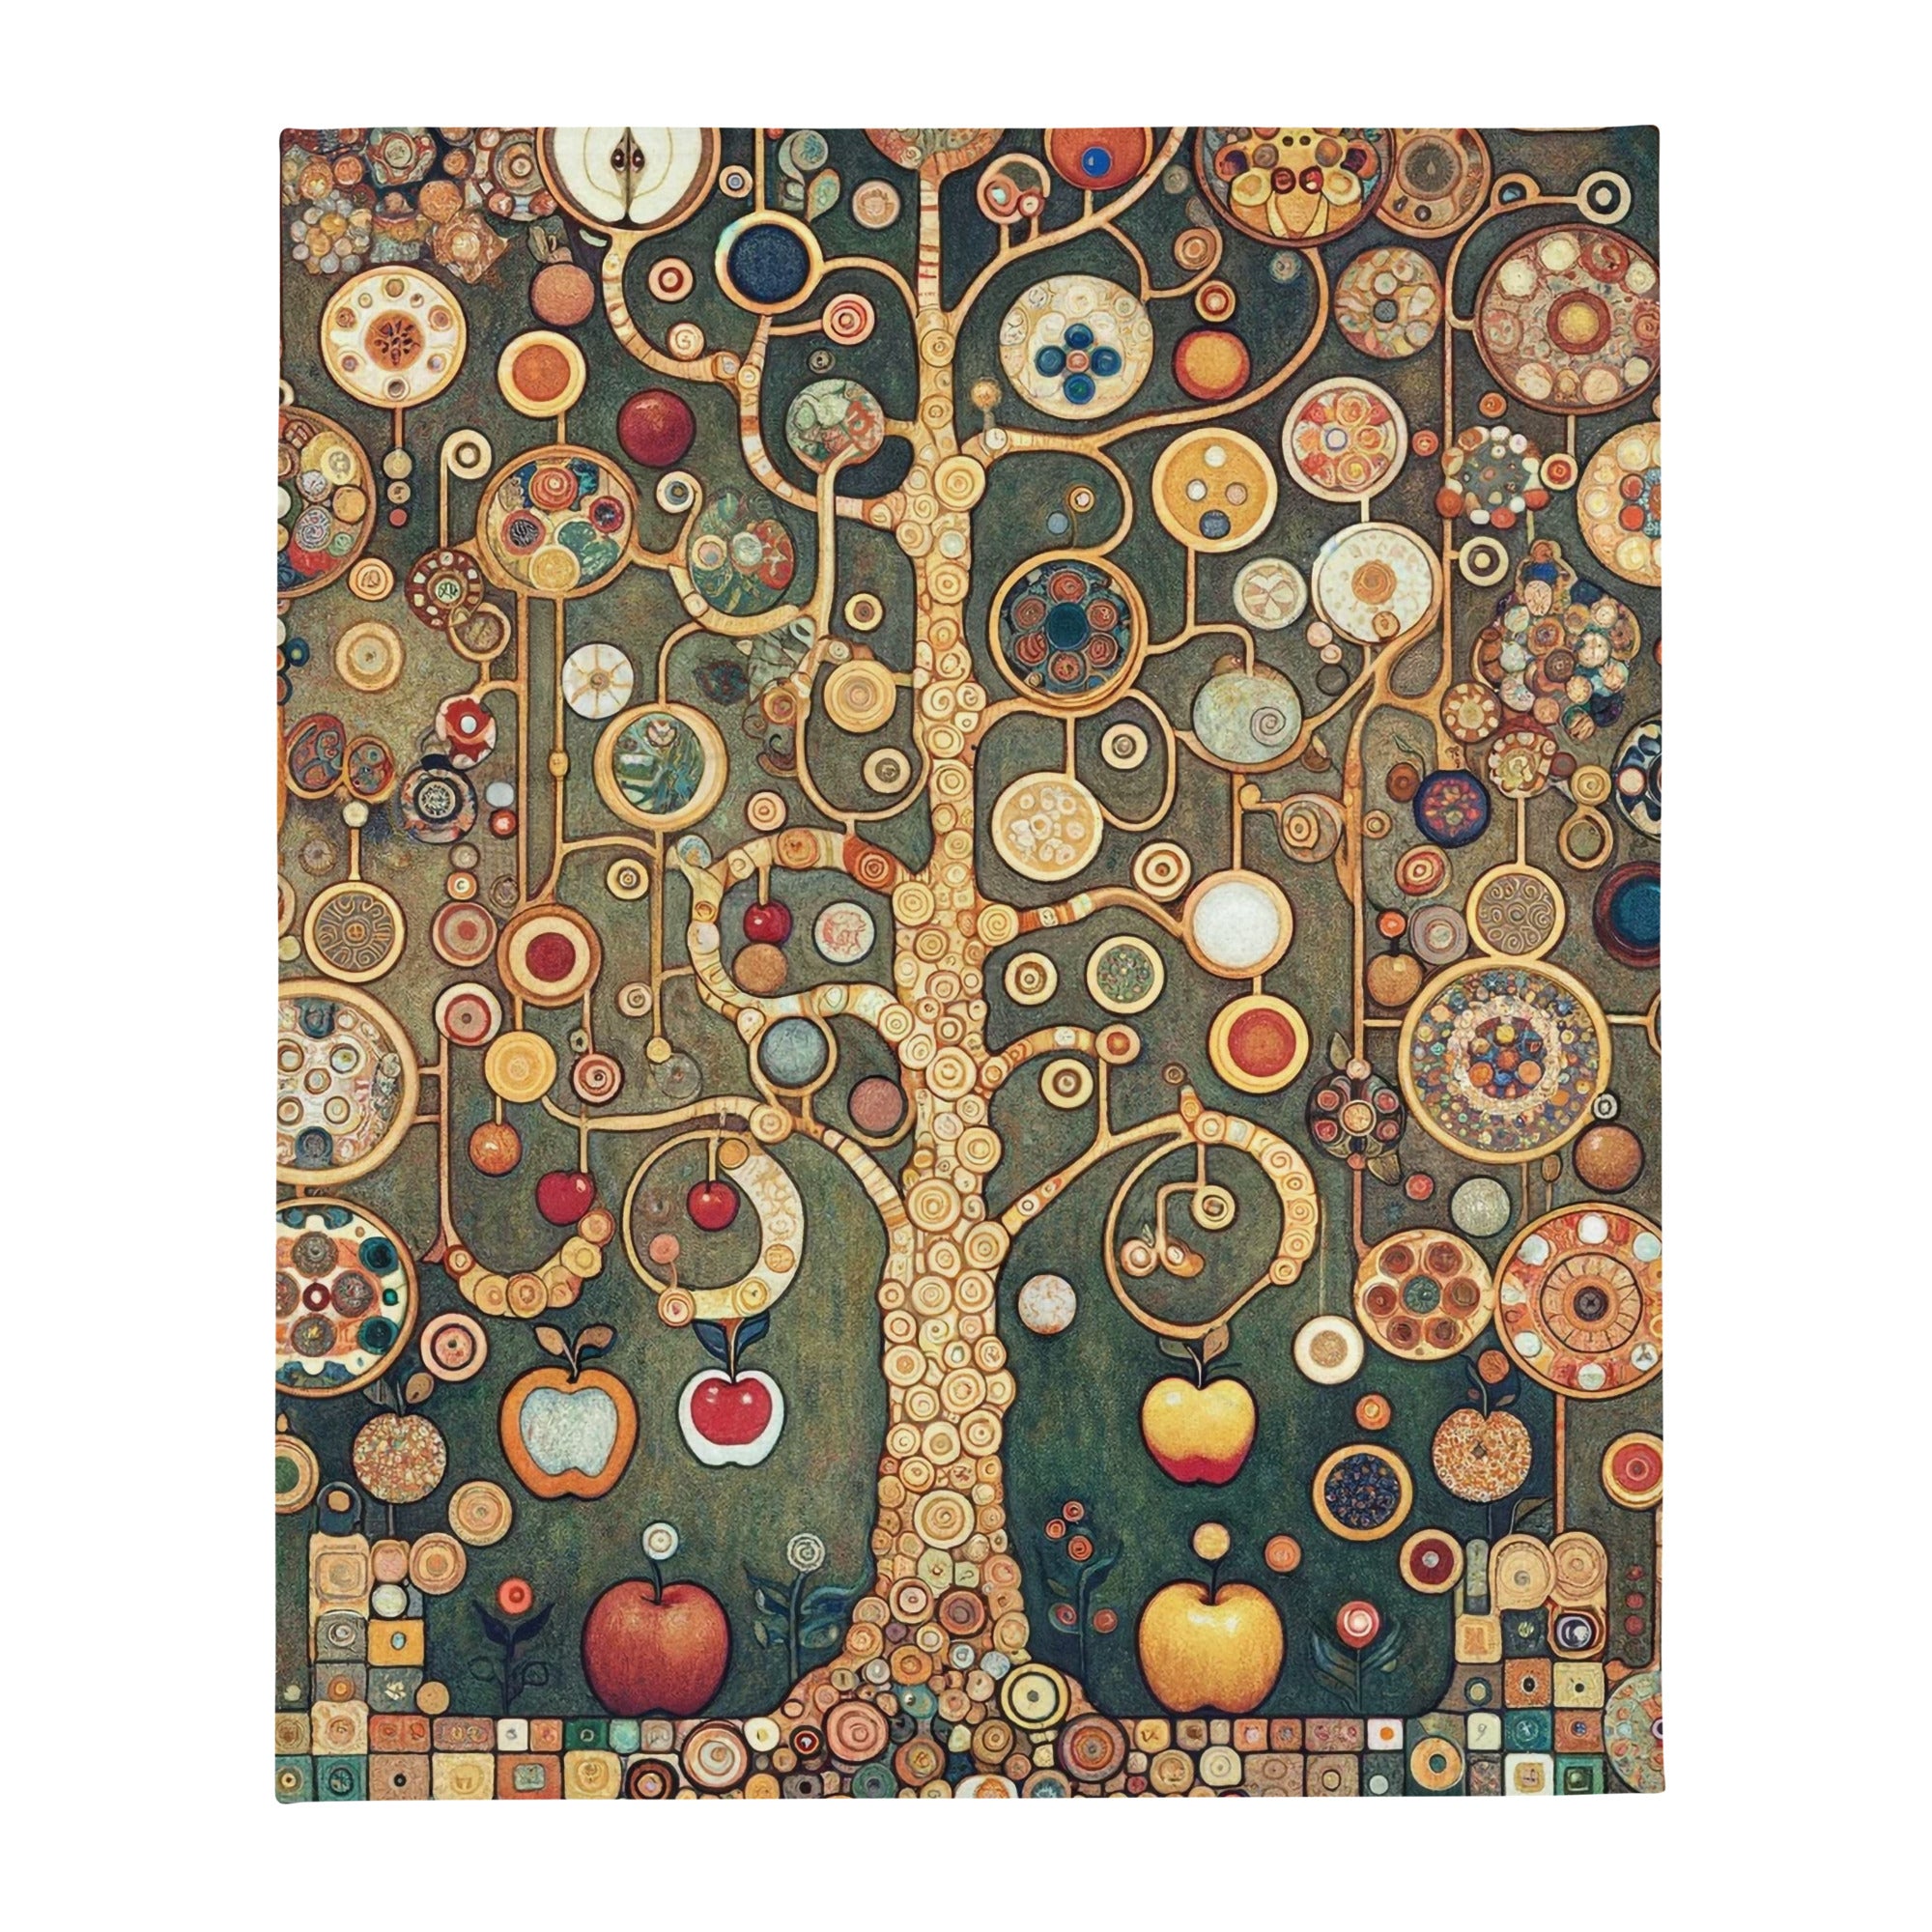 Gustav Klimt 'Apple Tree I' Famous Painting Throw Blanket | Premium Art Throw